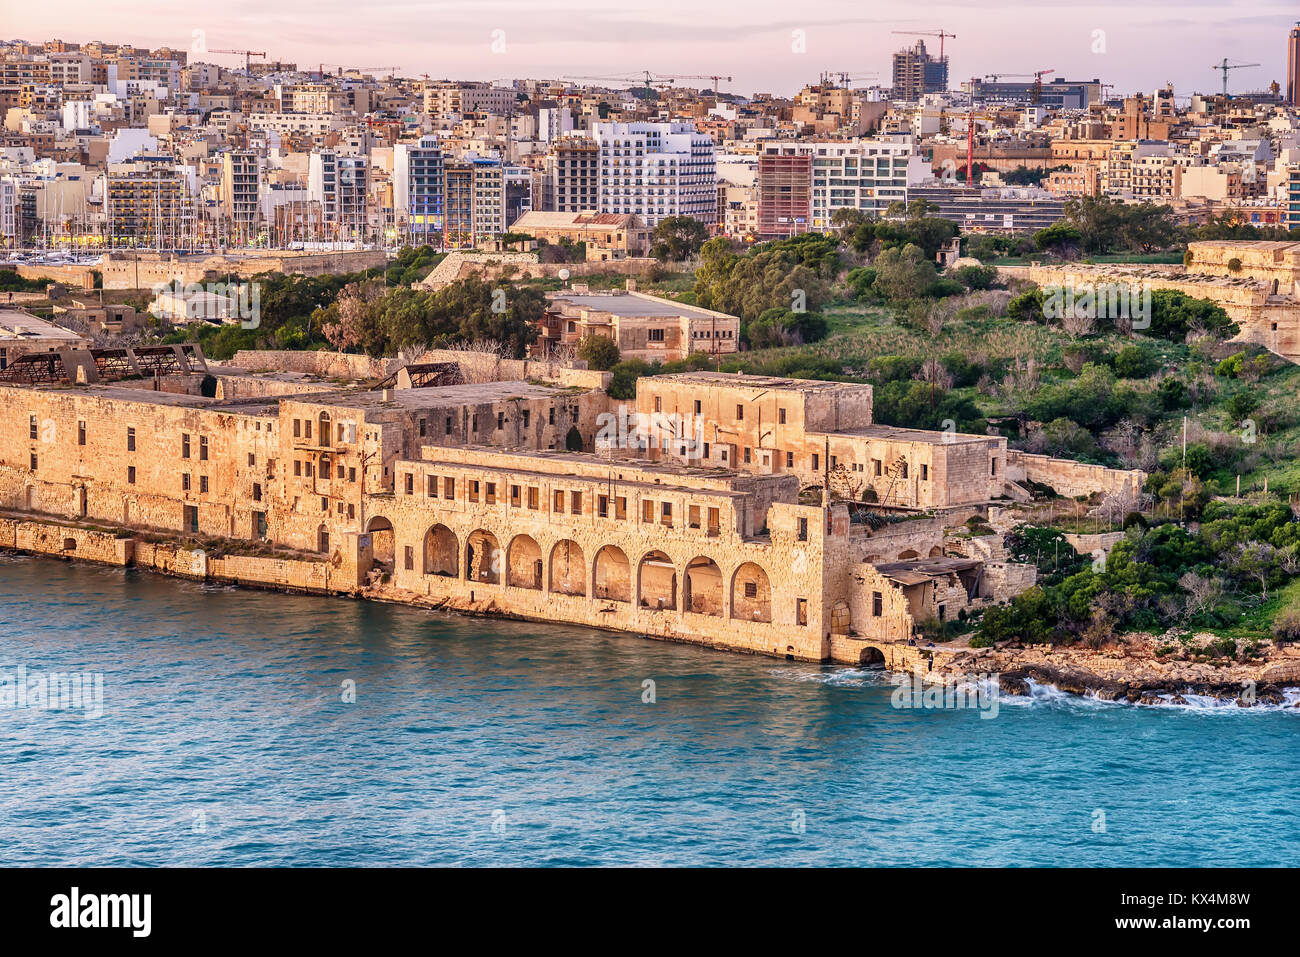 Malta: Insel Manoel, Il-Gzira, Sliema und Marsans Hafen Stockfoto